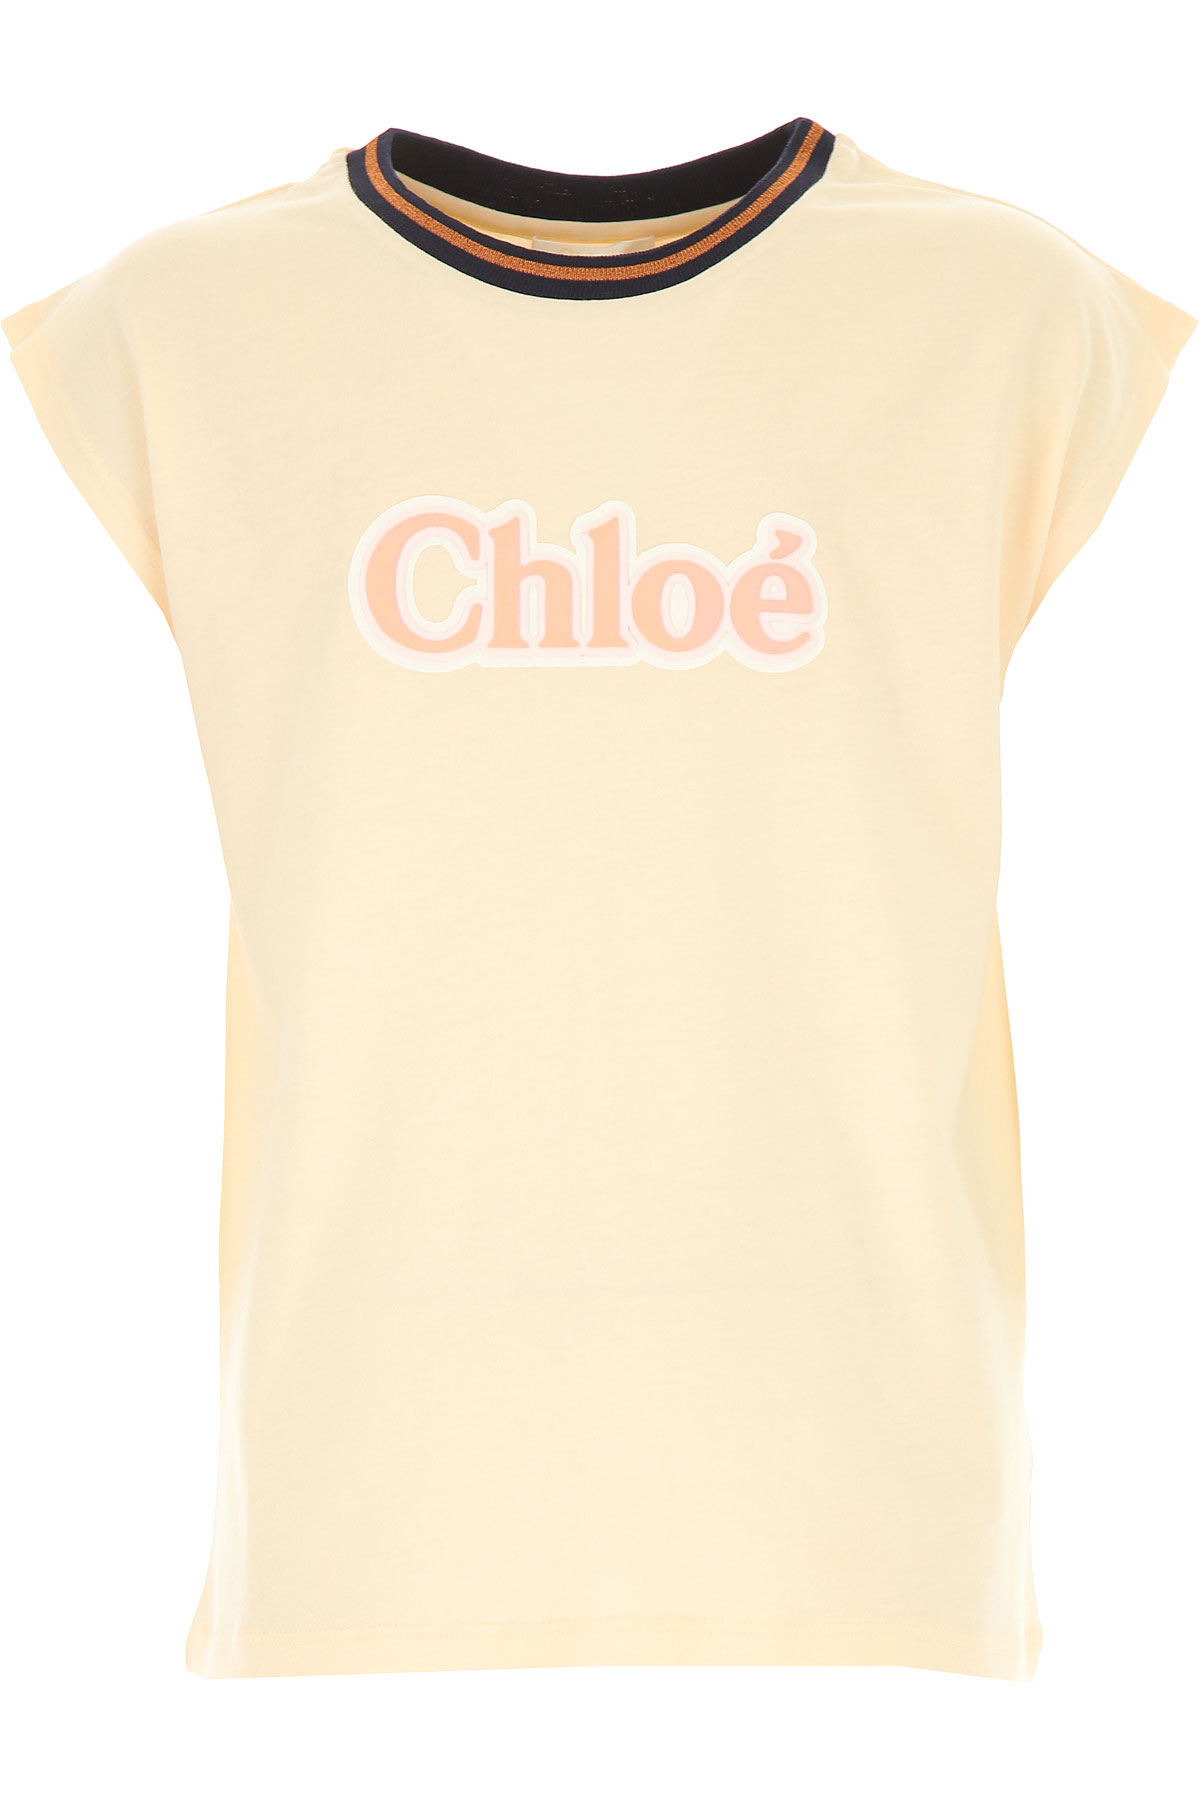 Chloe Kinder T-Shirt für Mädchen Günstig im Sale, Puder, Baumwolle, 2017, 10Y 12Y 14Y 8Y